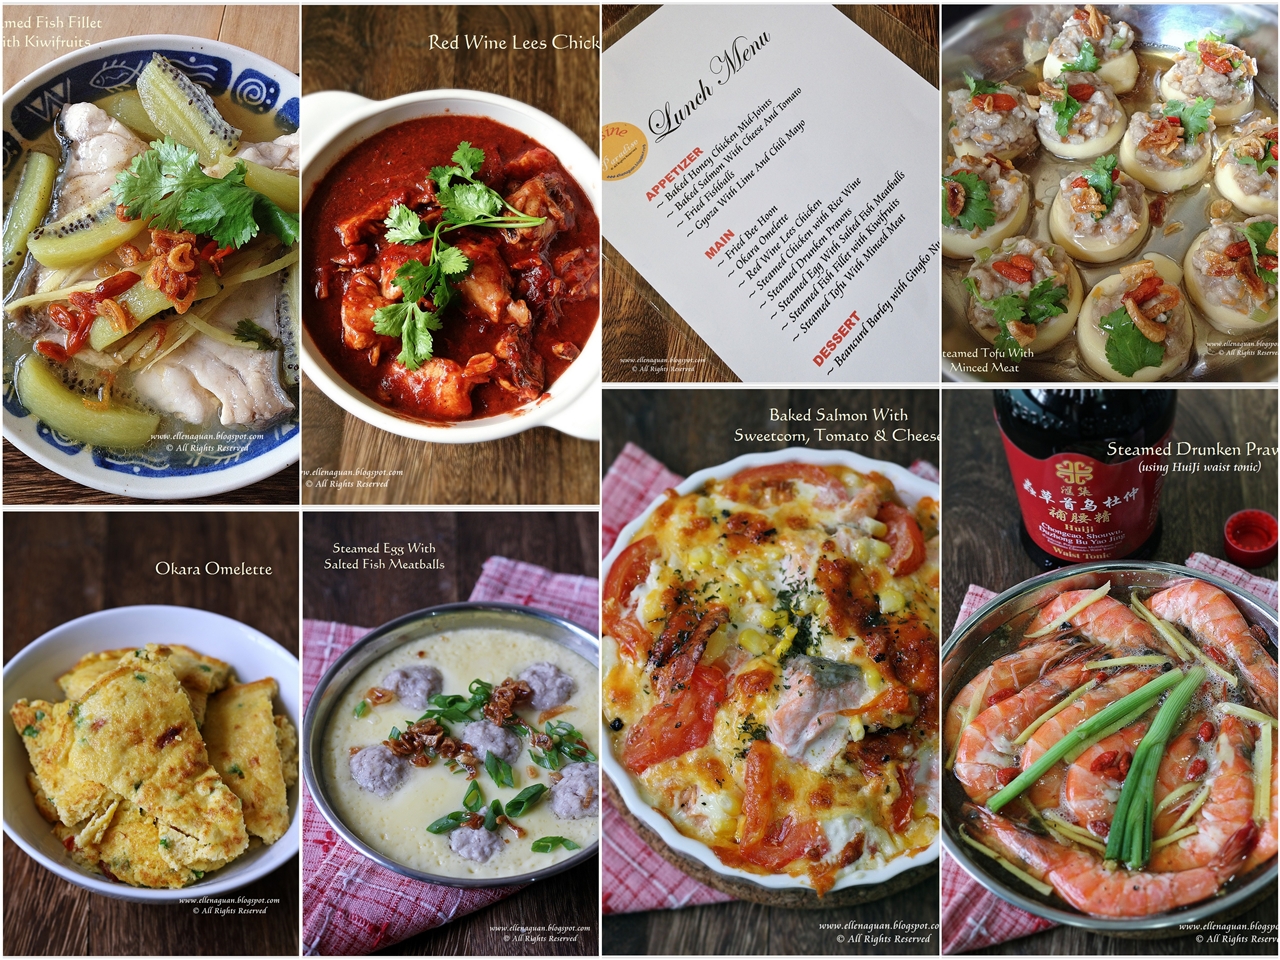 Cuisine Paradise | Singapore Food Blog | Recipes, Reviews And Travel